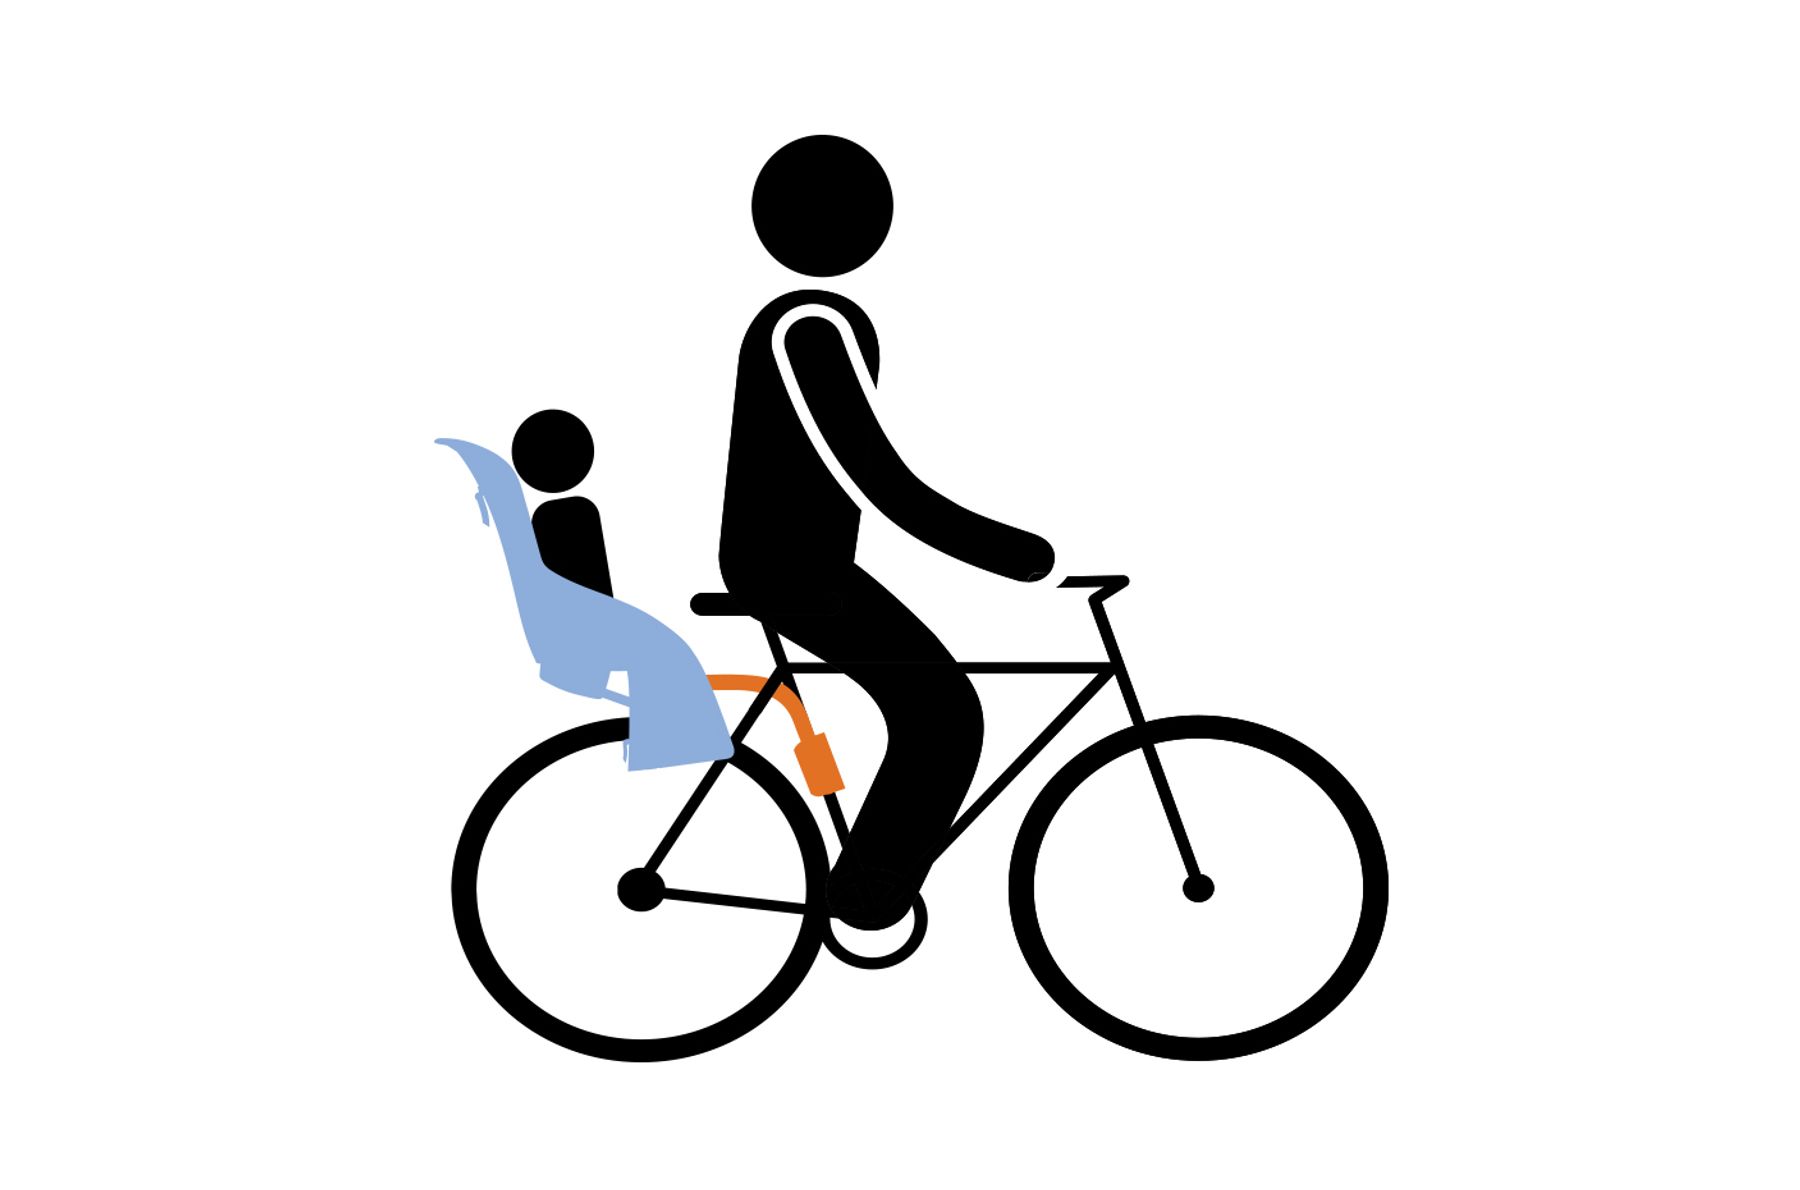 Child seat mounted on bike rear